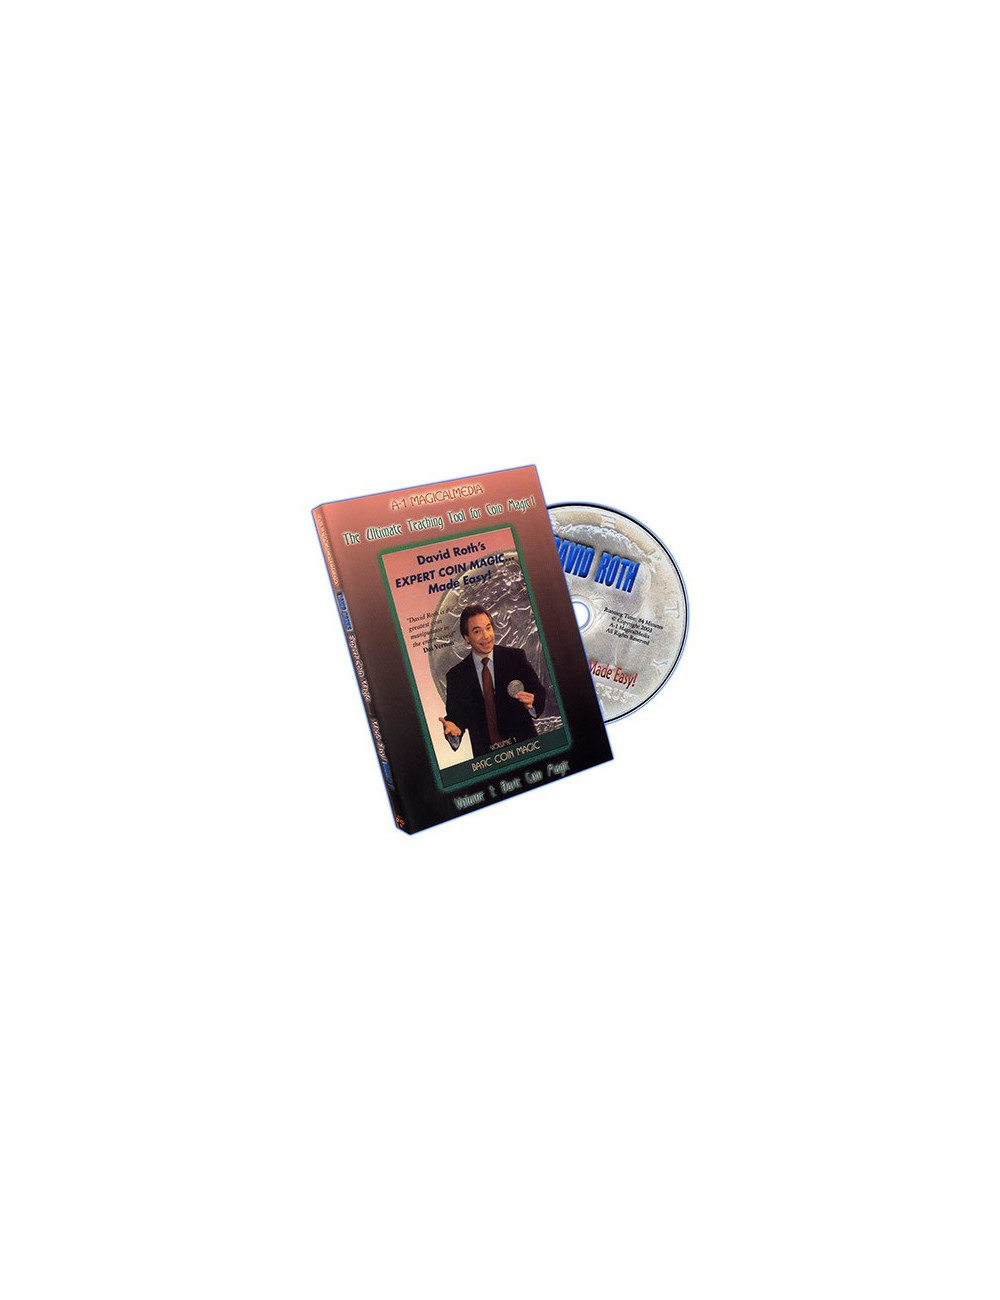 DVD DAVID ROTH'S EXPERT COIN MAGIC... MADE EASY! Volume 1 